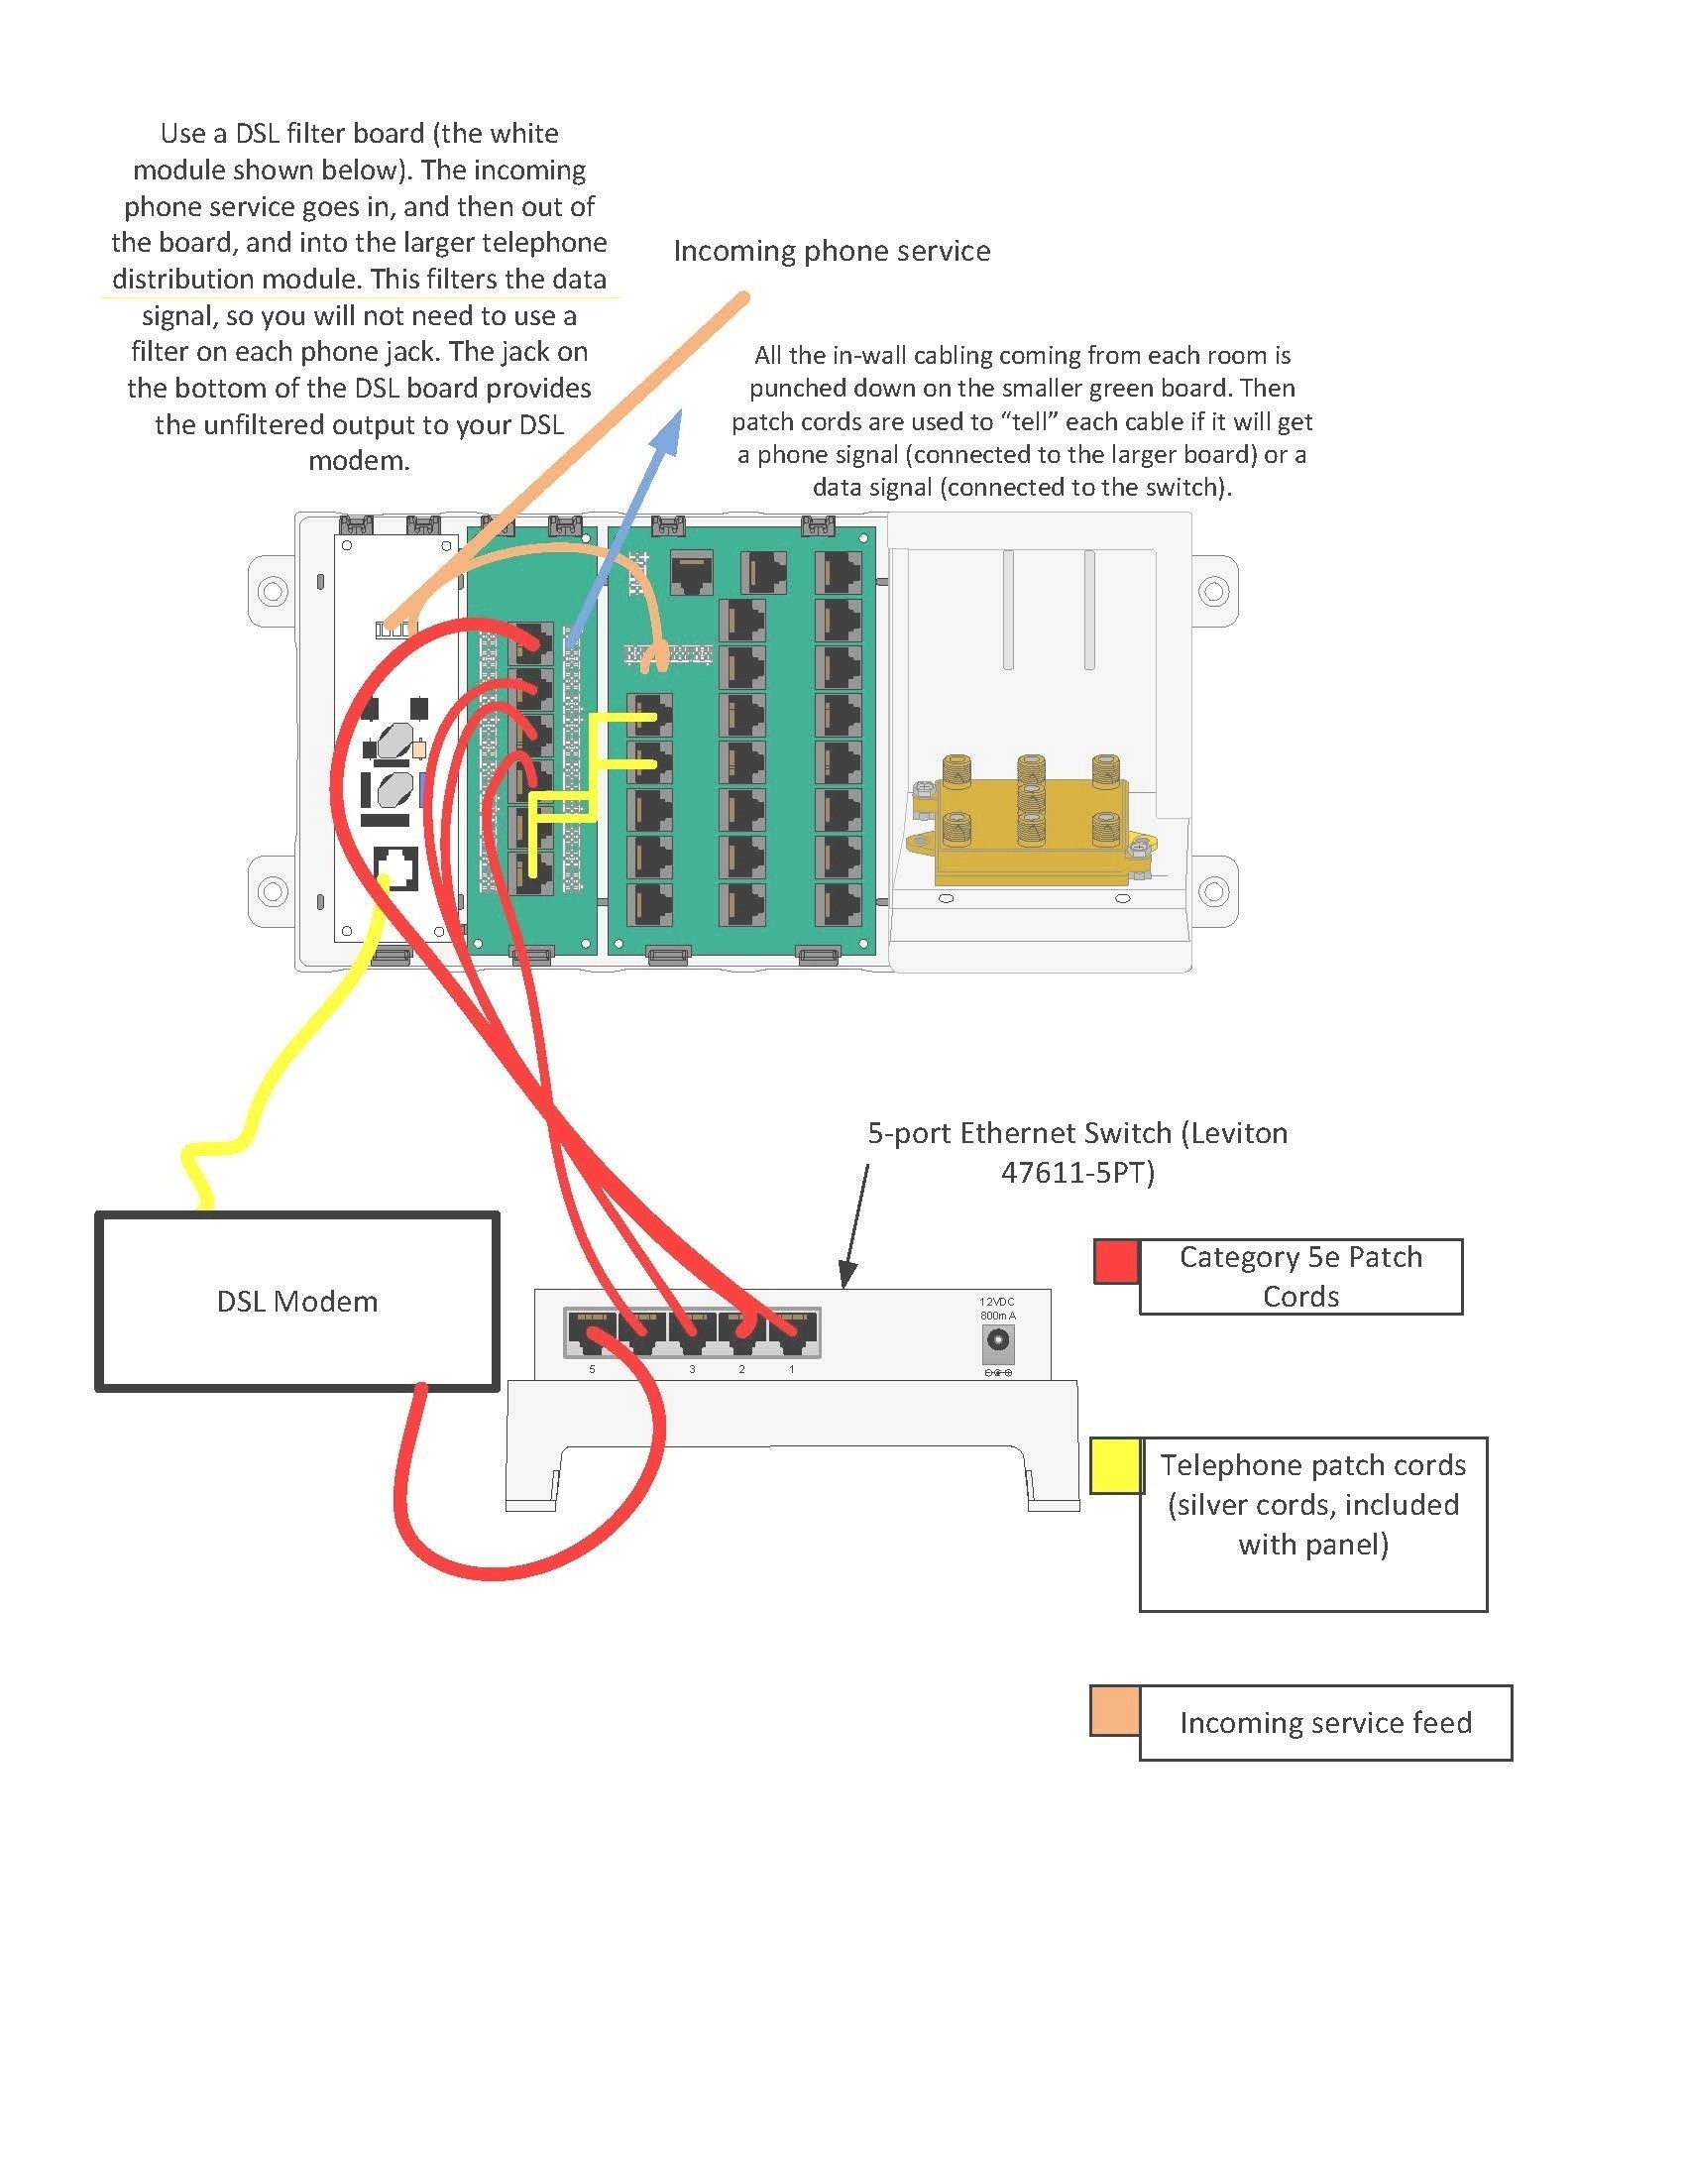 Home Run Wiring Diagram Save Adsl Home Wiring Diagram Valid Home Phone Wiring for Dsl Diagram